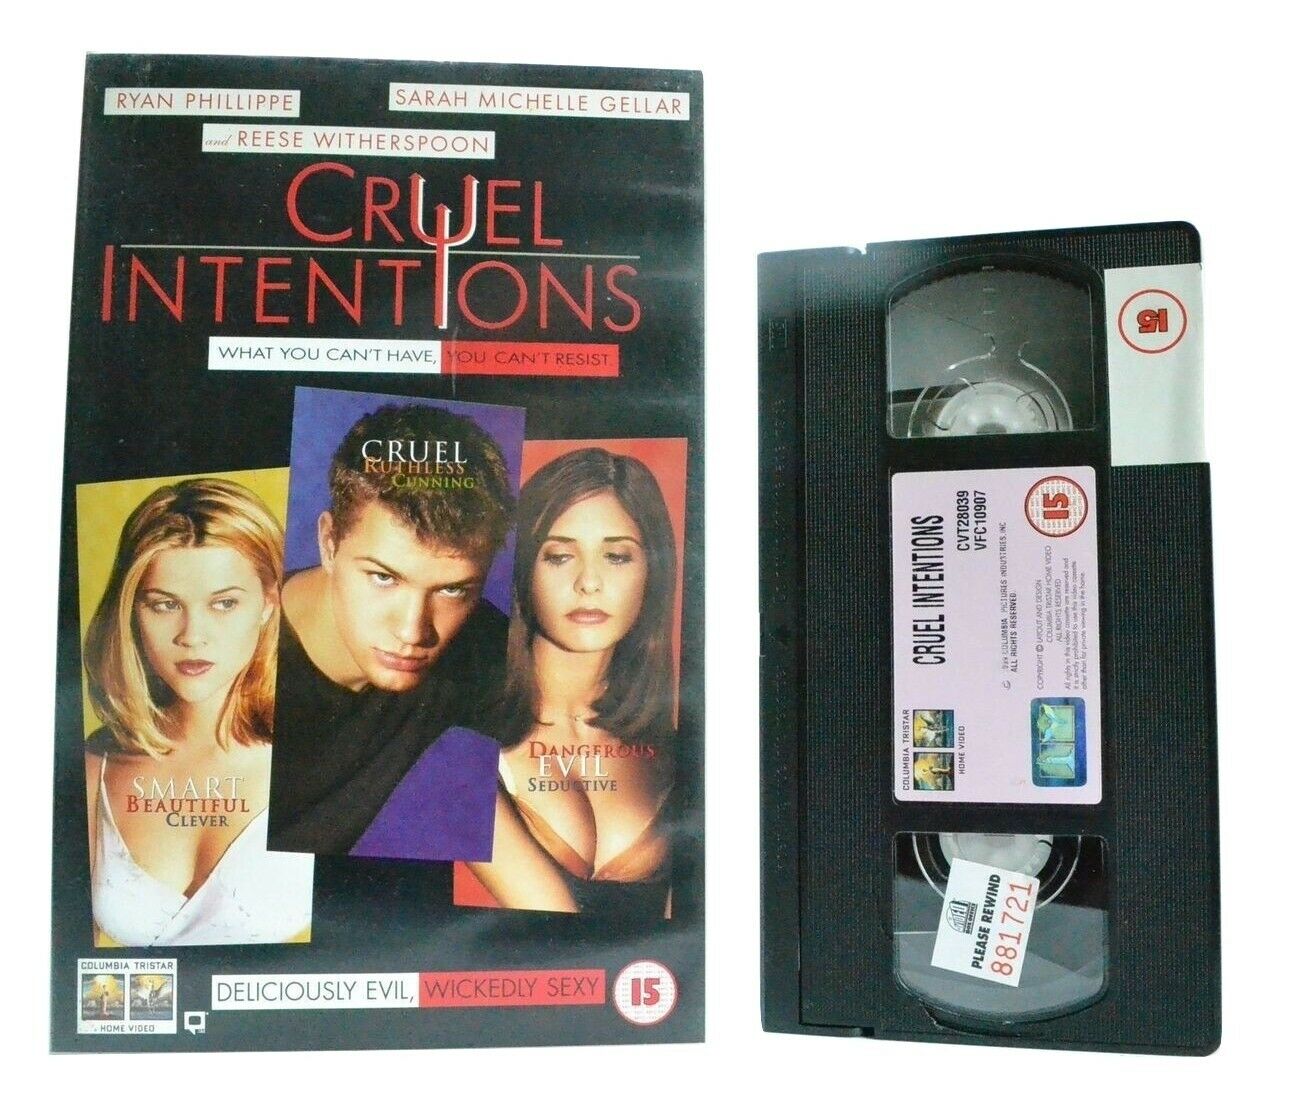 Cruel Intentions: Based Of "Les Liaisons Dangereuses" - Romantic Drama - VHS-